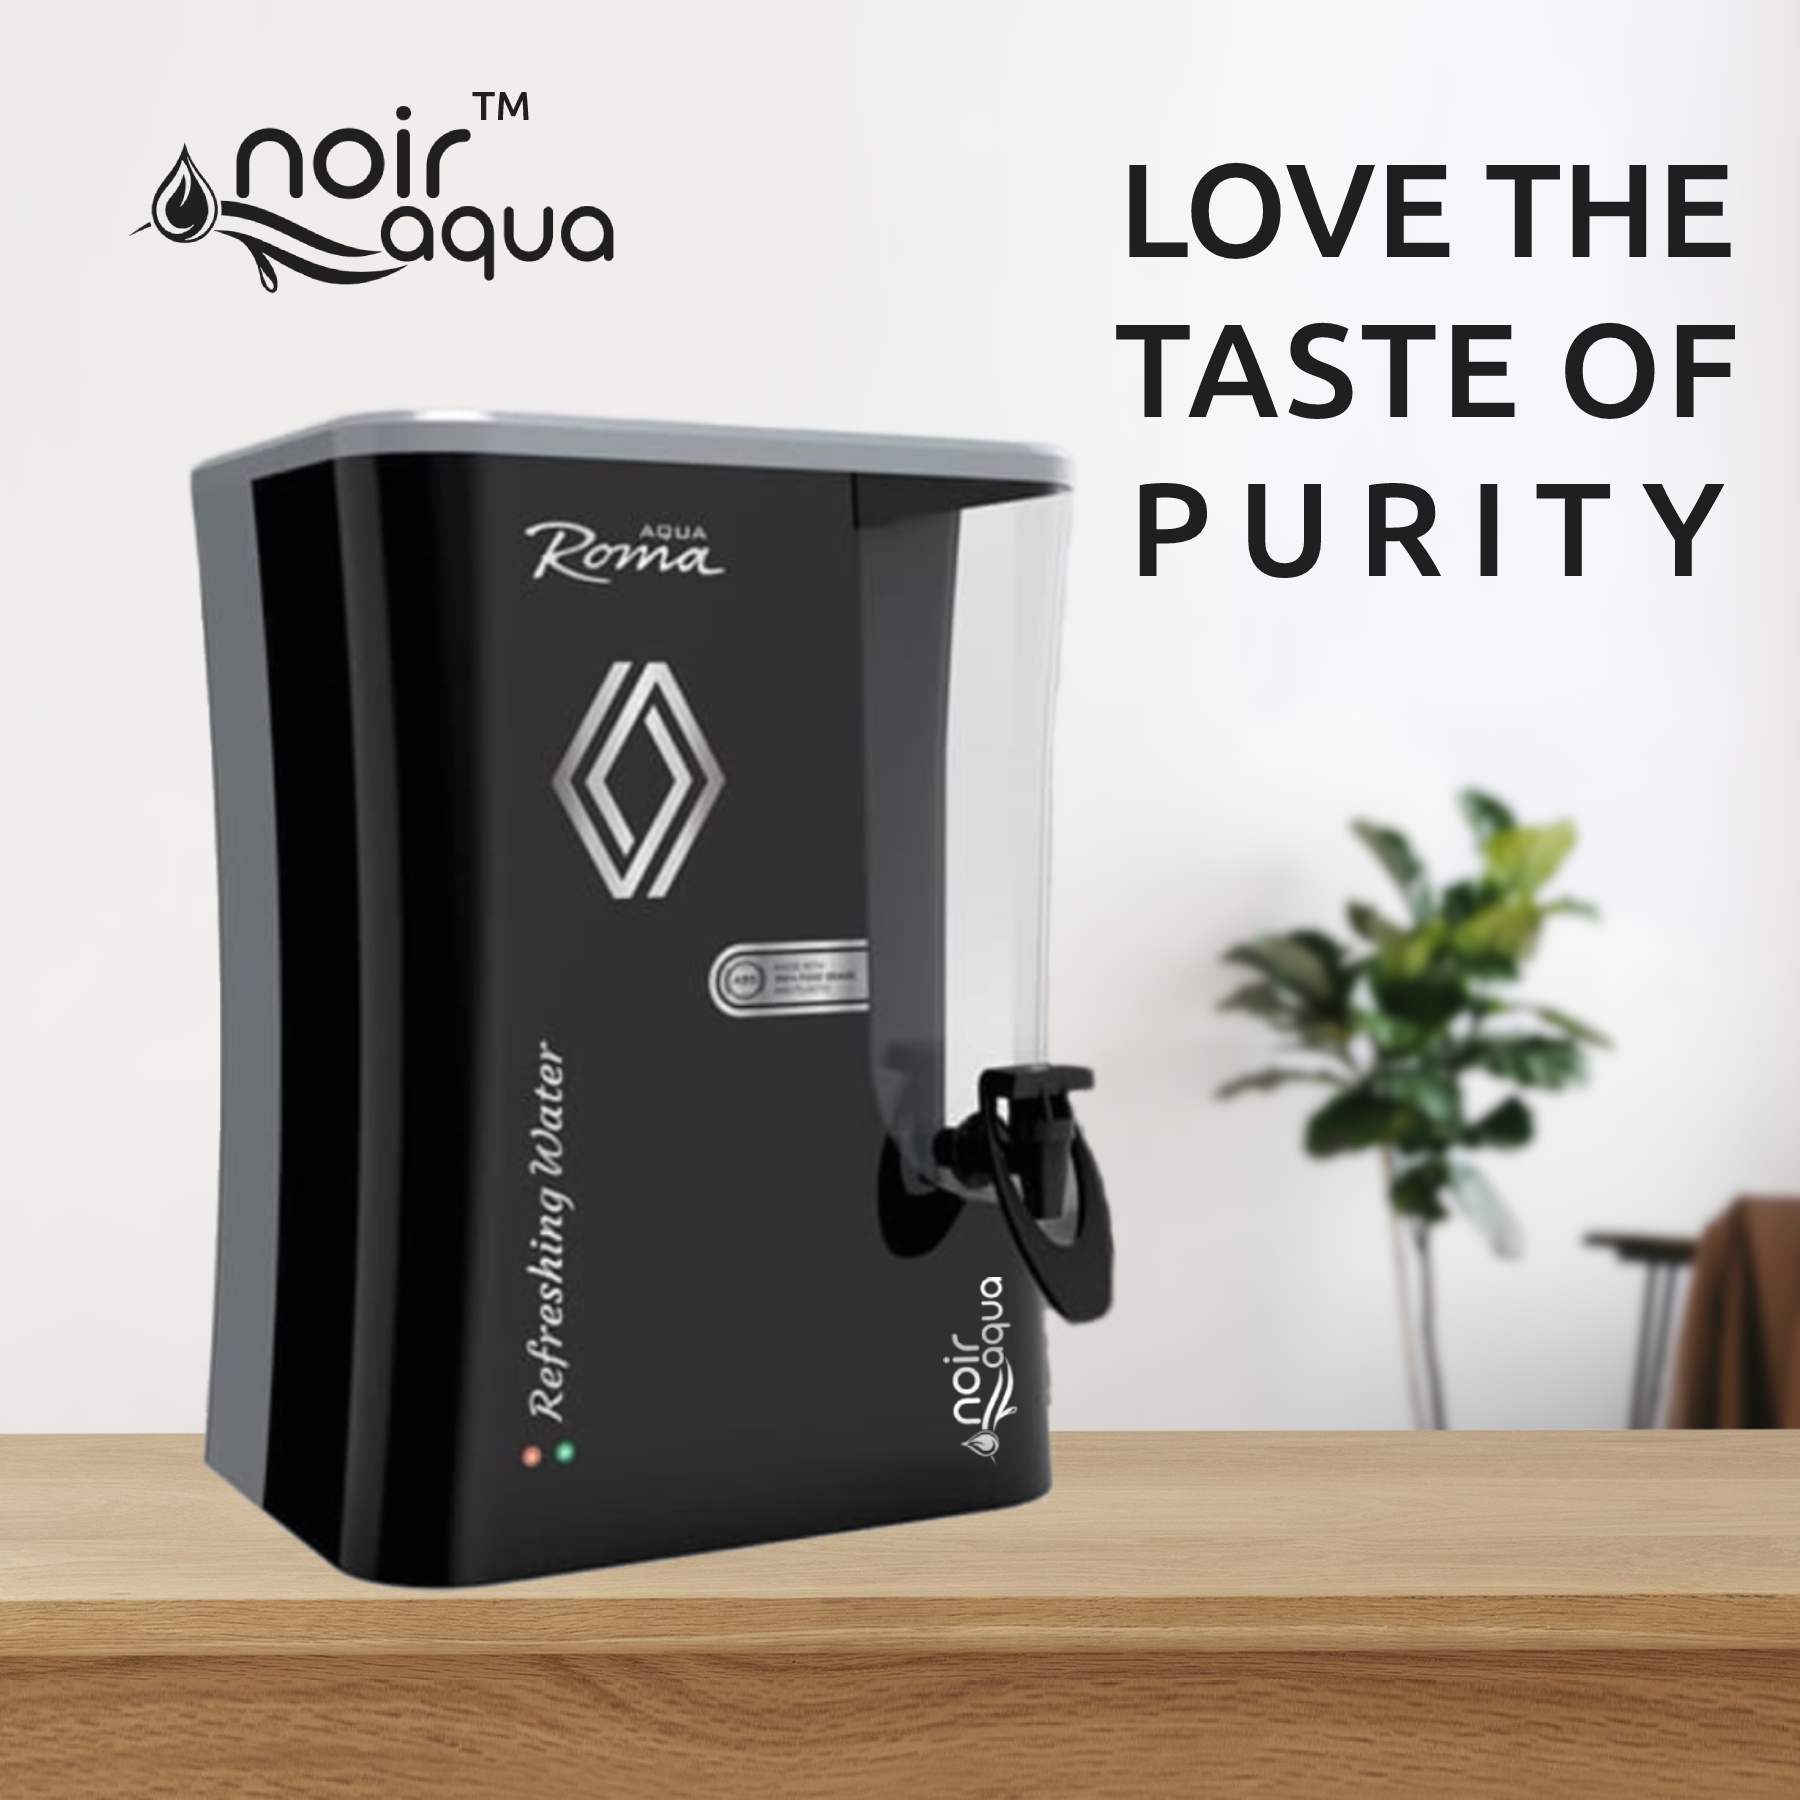 Noir Aqua Roma Premium RO Water Purifier For Home RO + UV + UF +